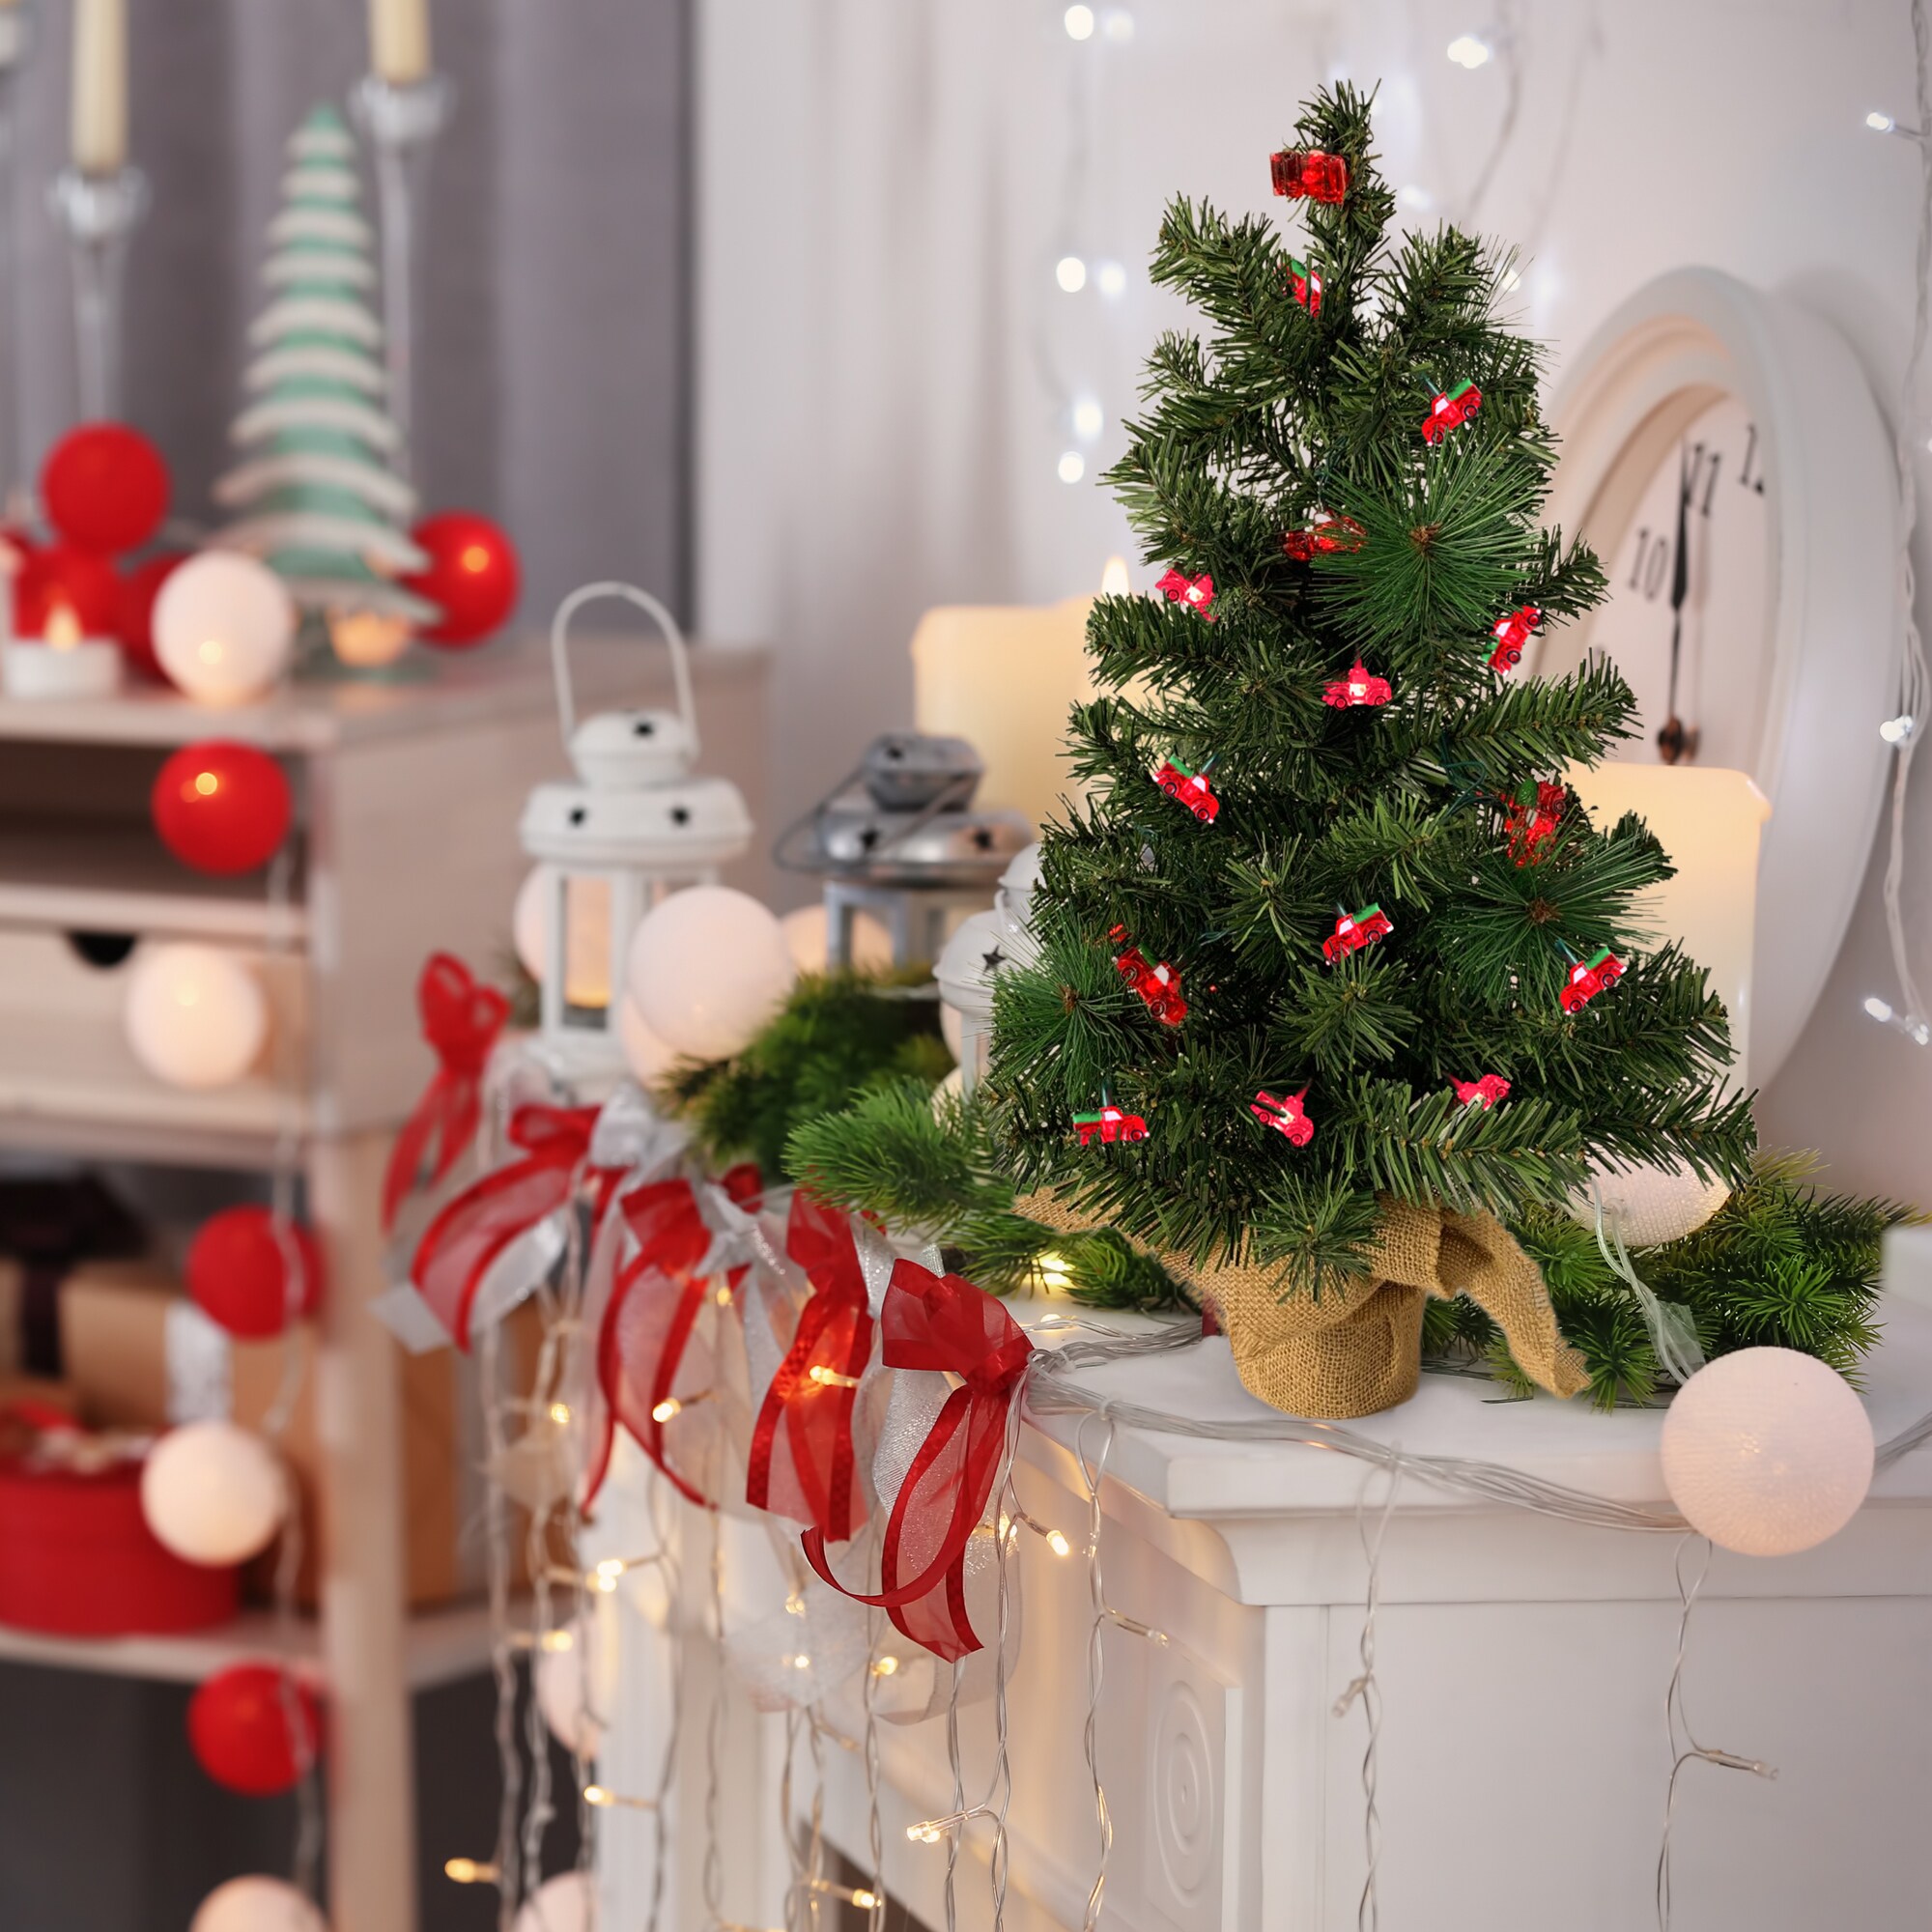 5 LED Rudolph String Light Battery Powered Christmas Tree Wreath Mantle Lighting 